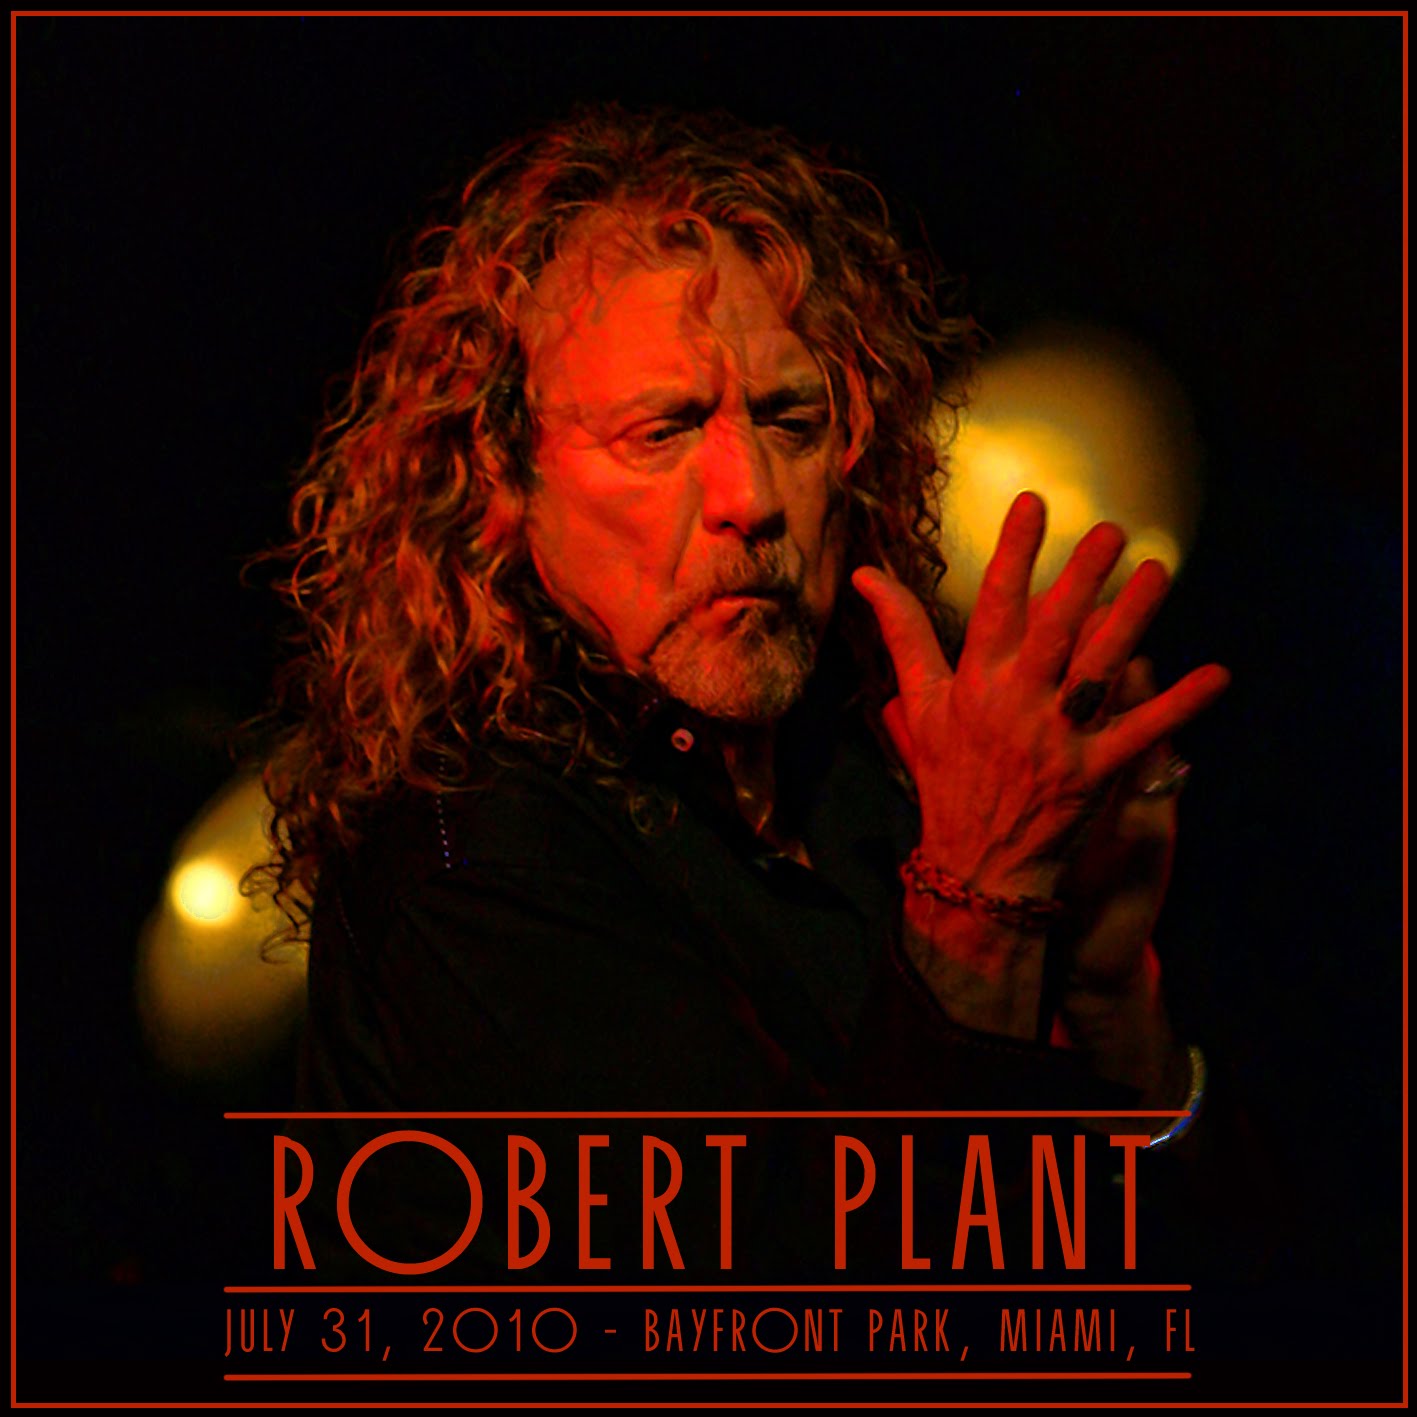 Big robert plant. Robert Plant группа. Robert Plant дискография. Robert Plant 1982.